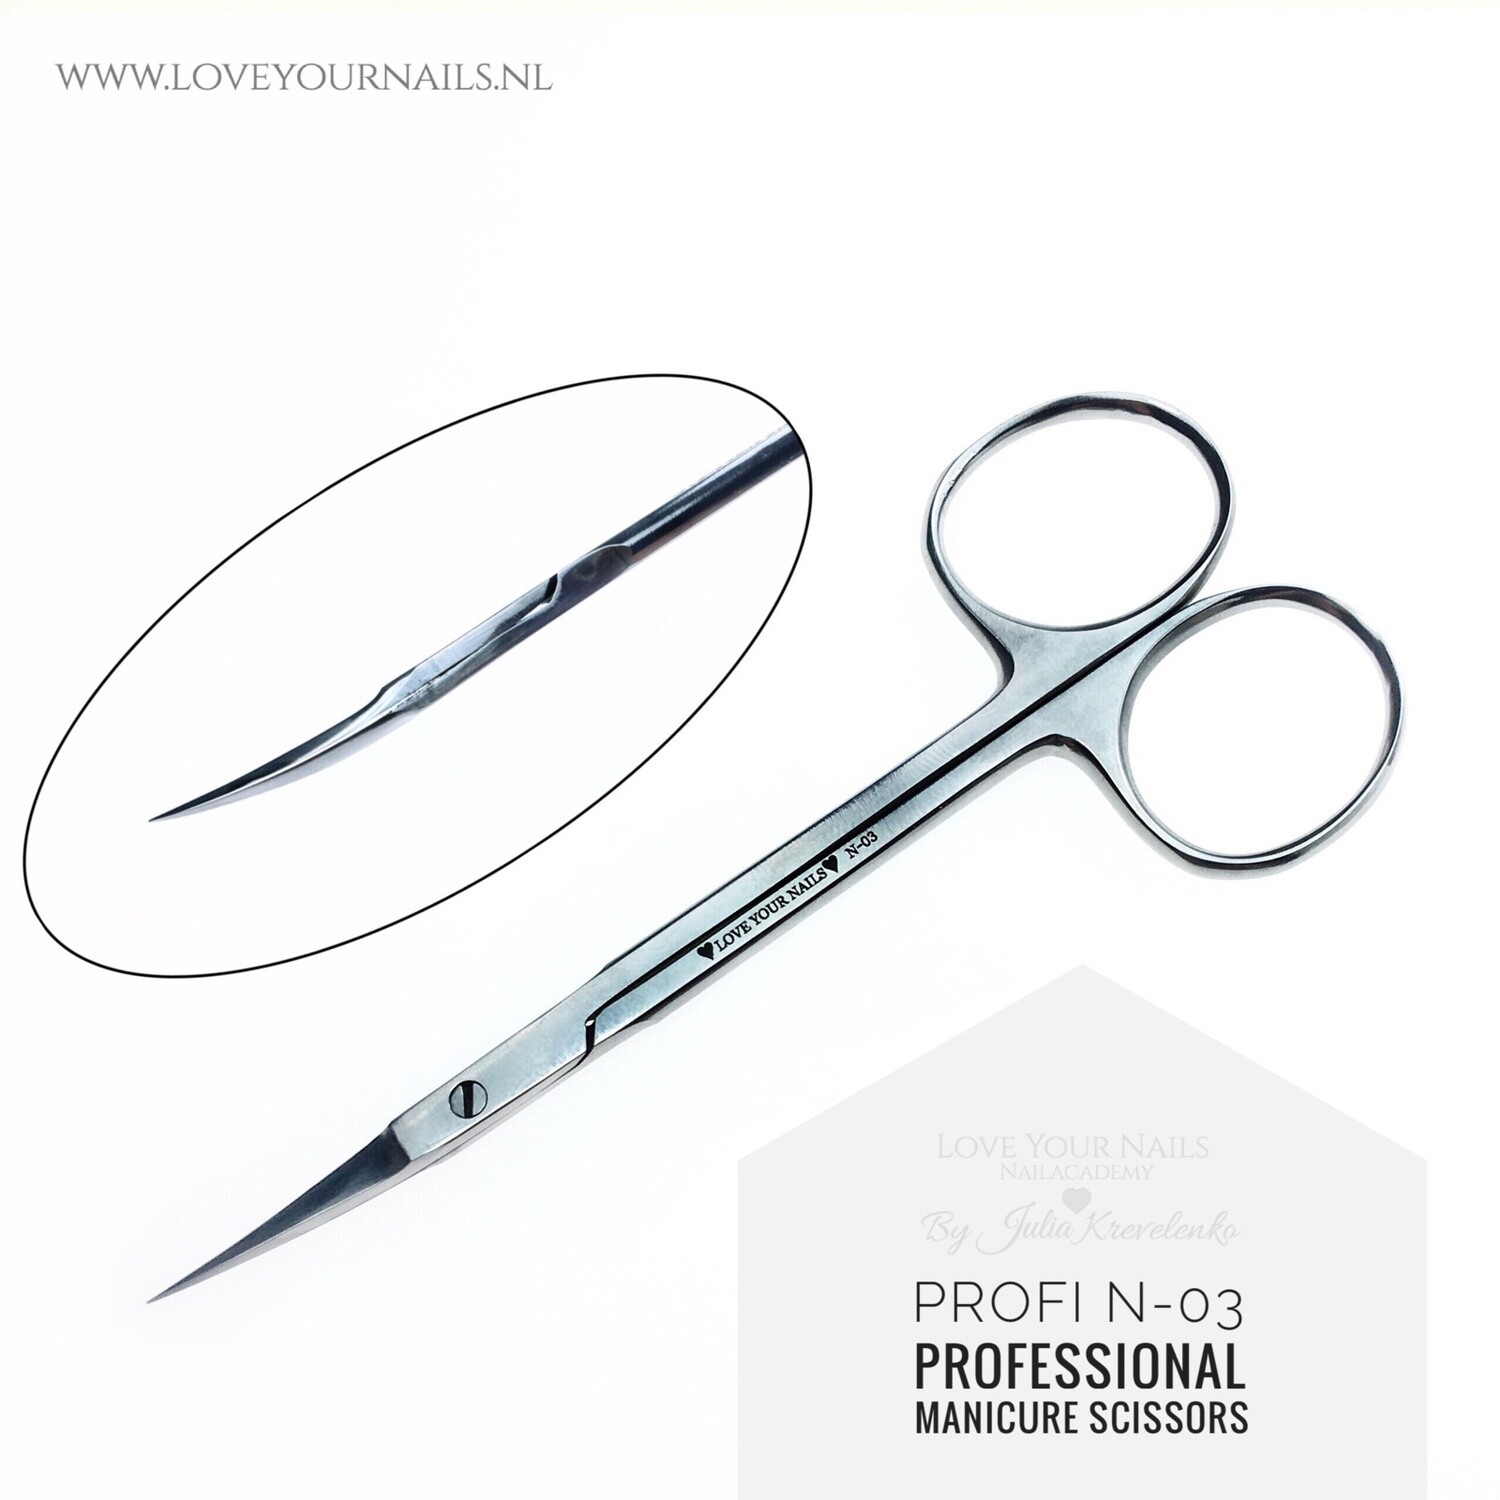 EXPERT Manicure scissors N-03 MUST HAVE